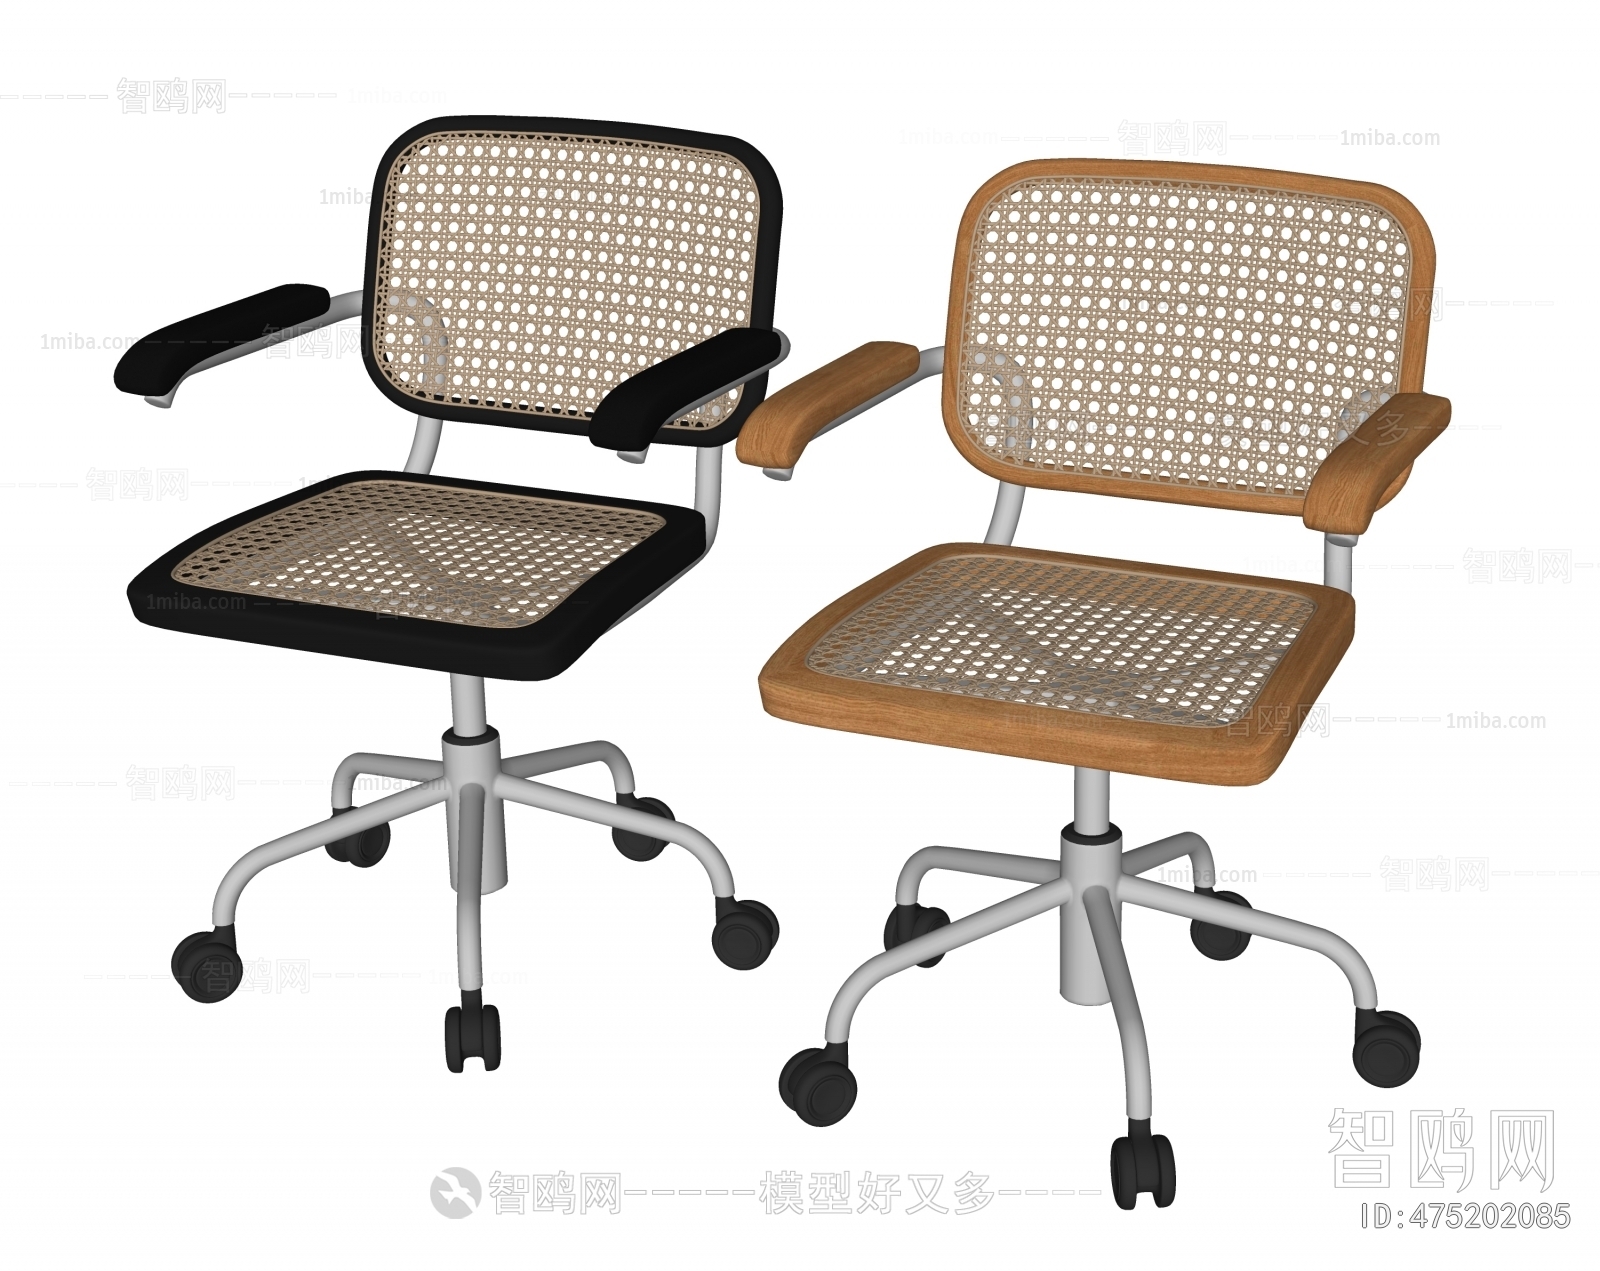 Wabi-sabi Style Office Chair